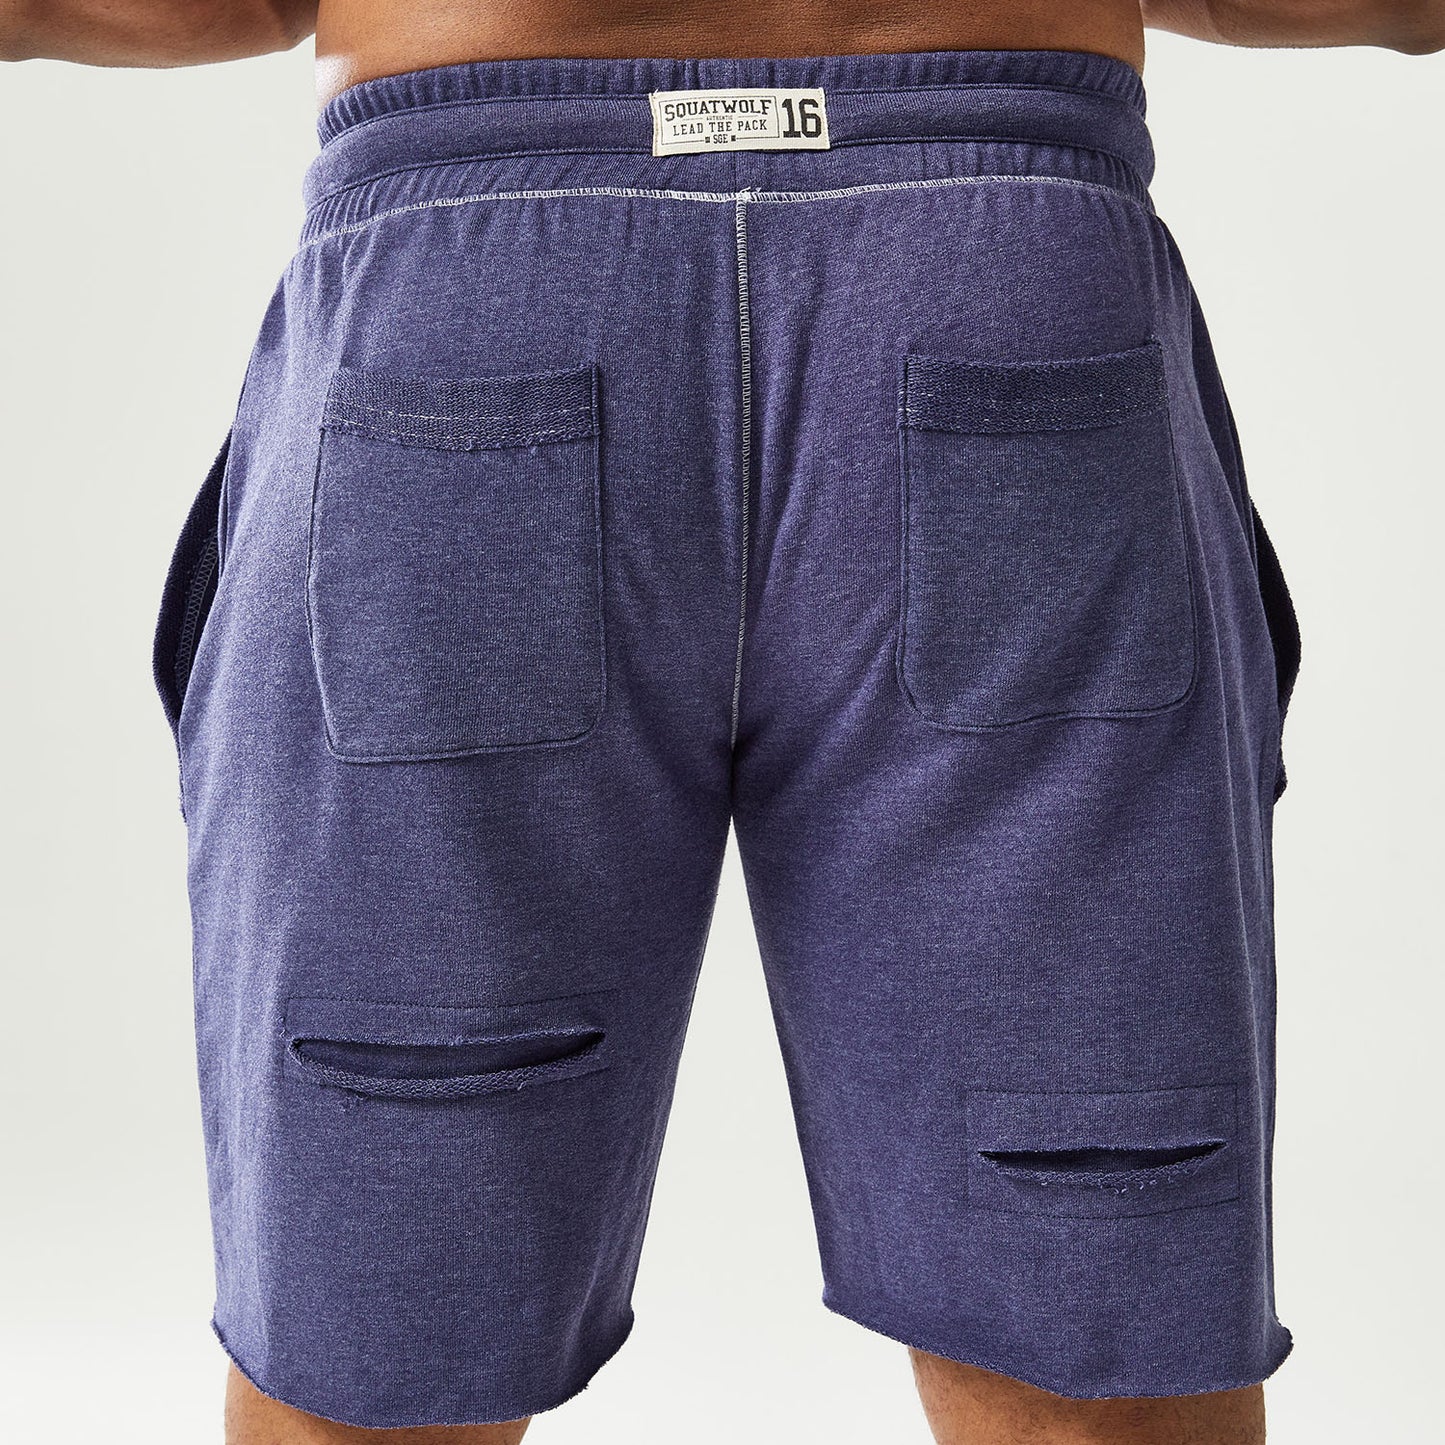 squatwolf-gym-wear-golden-era-ripped-shorts-patriot-blue-workout-short-for-men